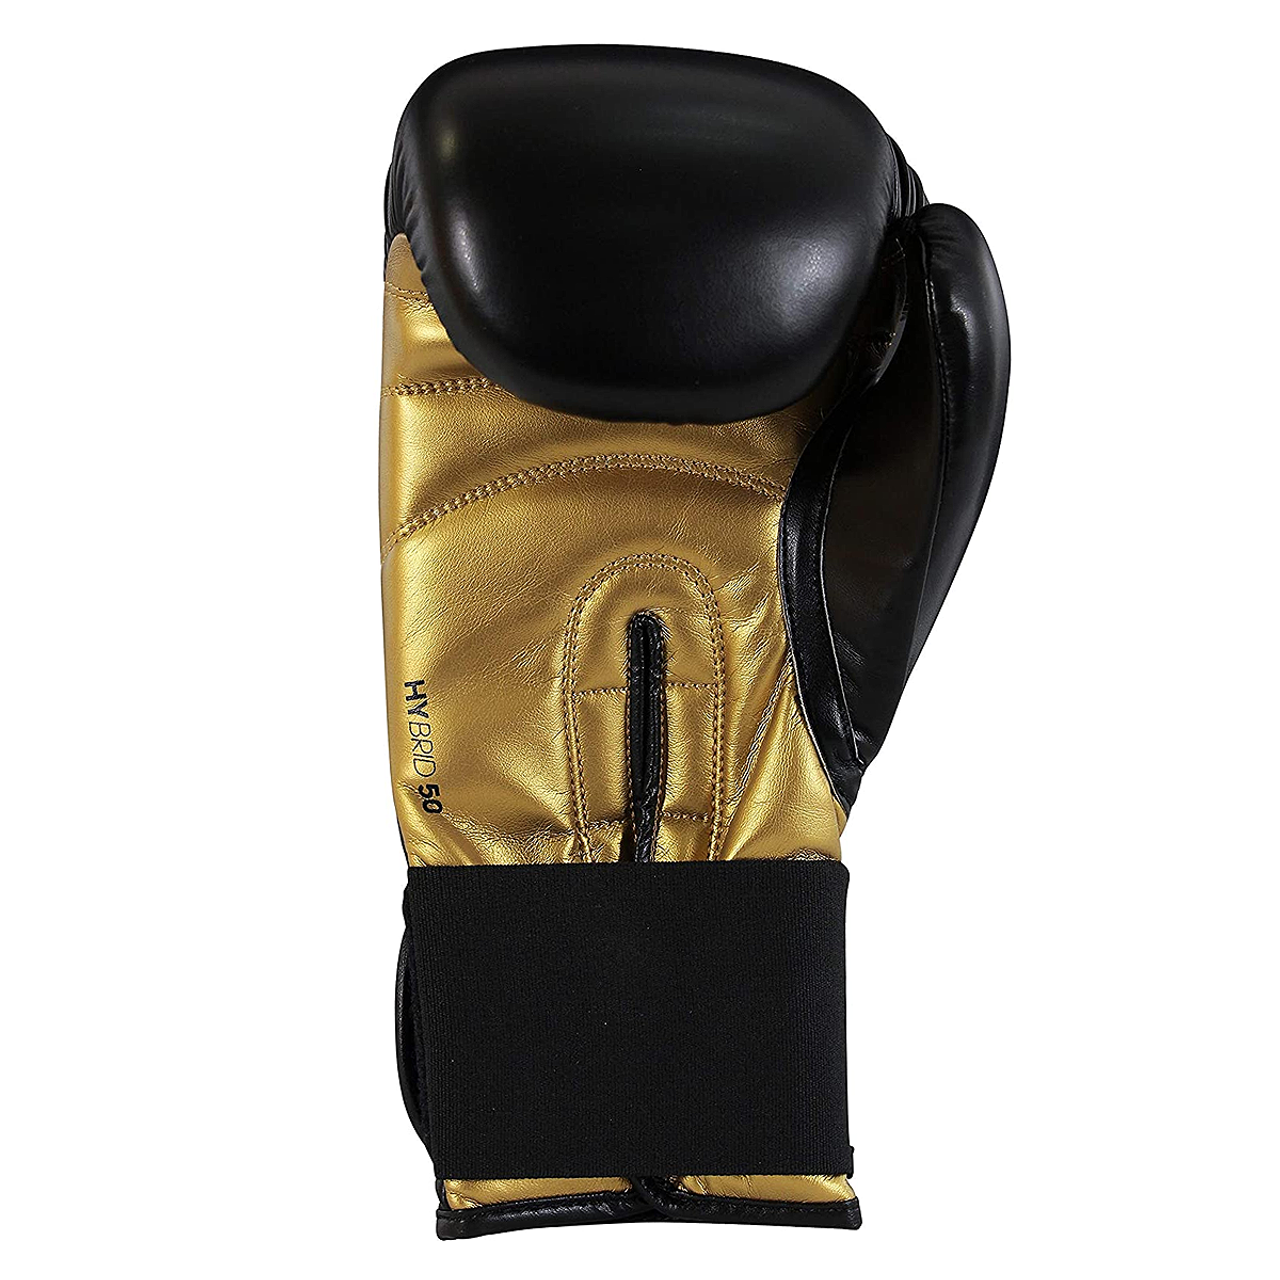 Adidas Hybrid 50 Boxing Gloves - Black, Gold